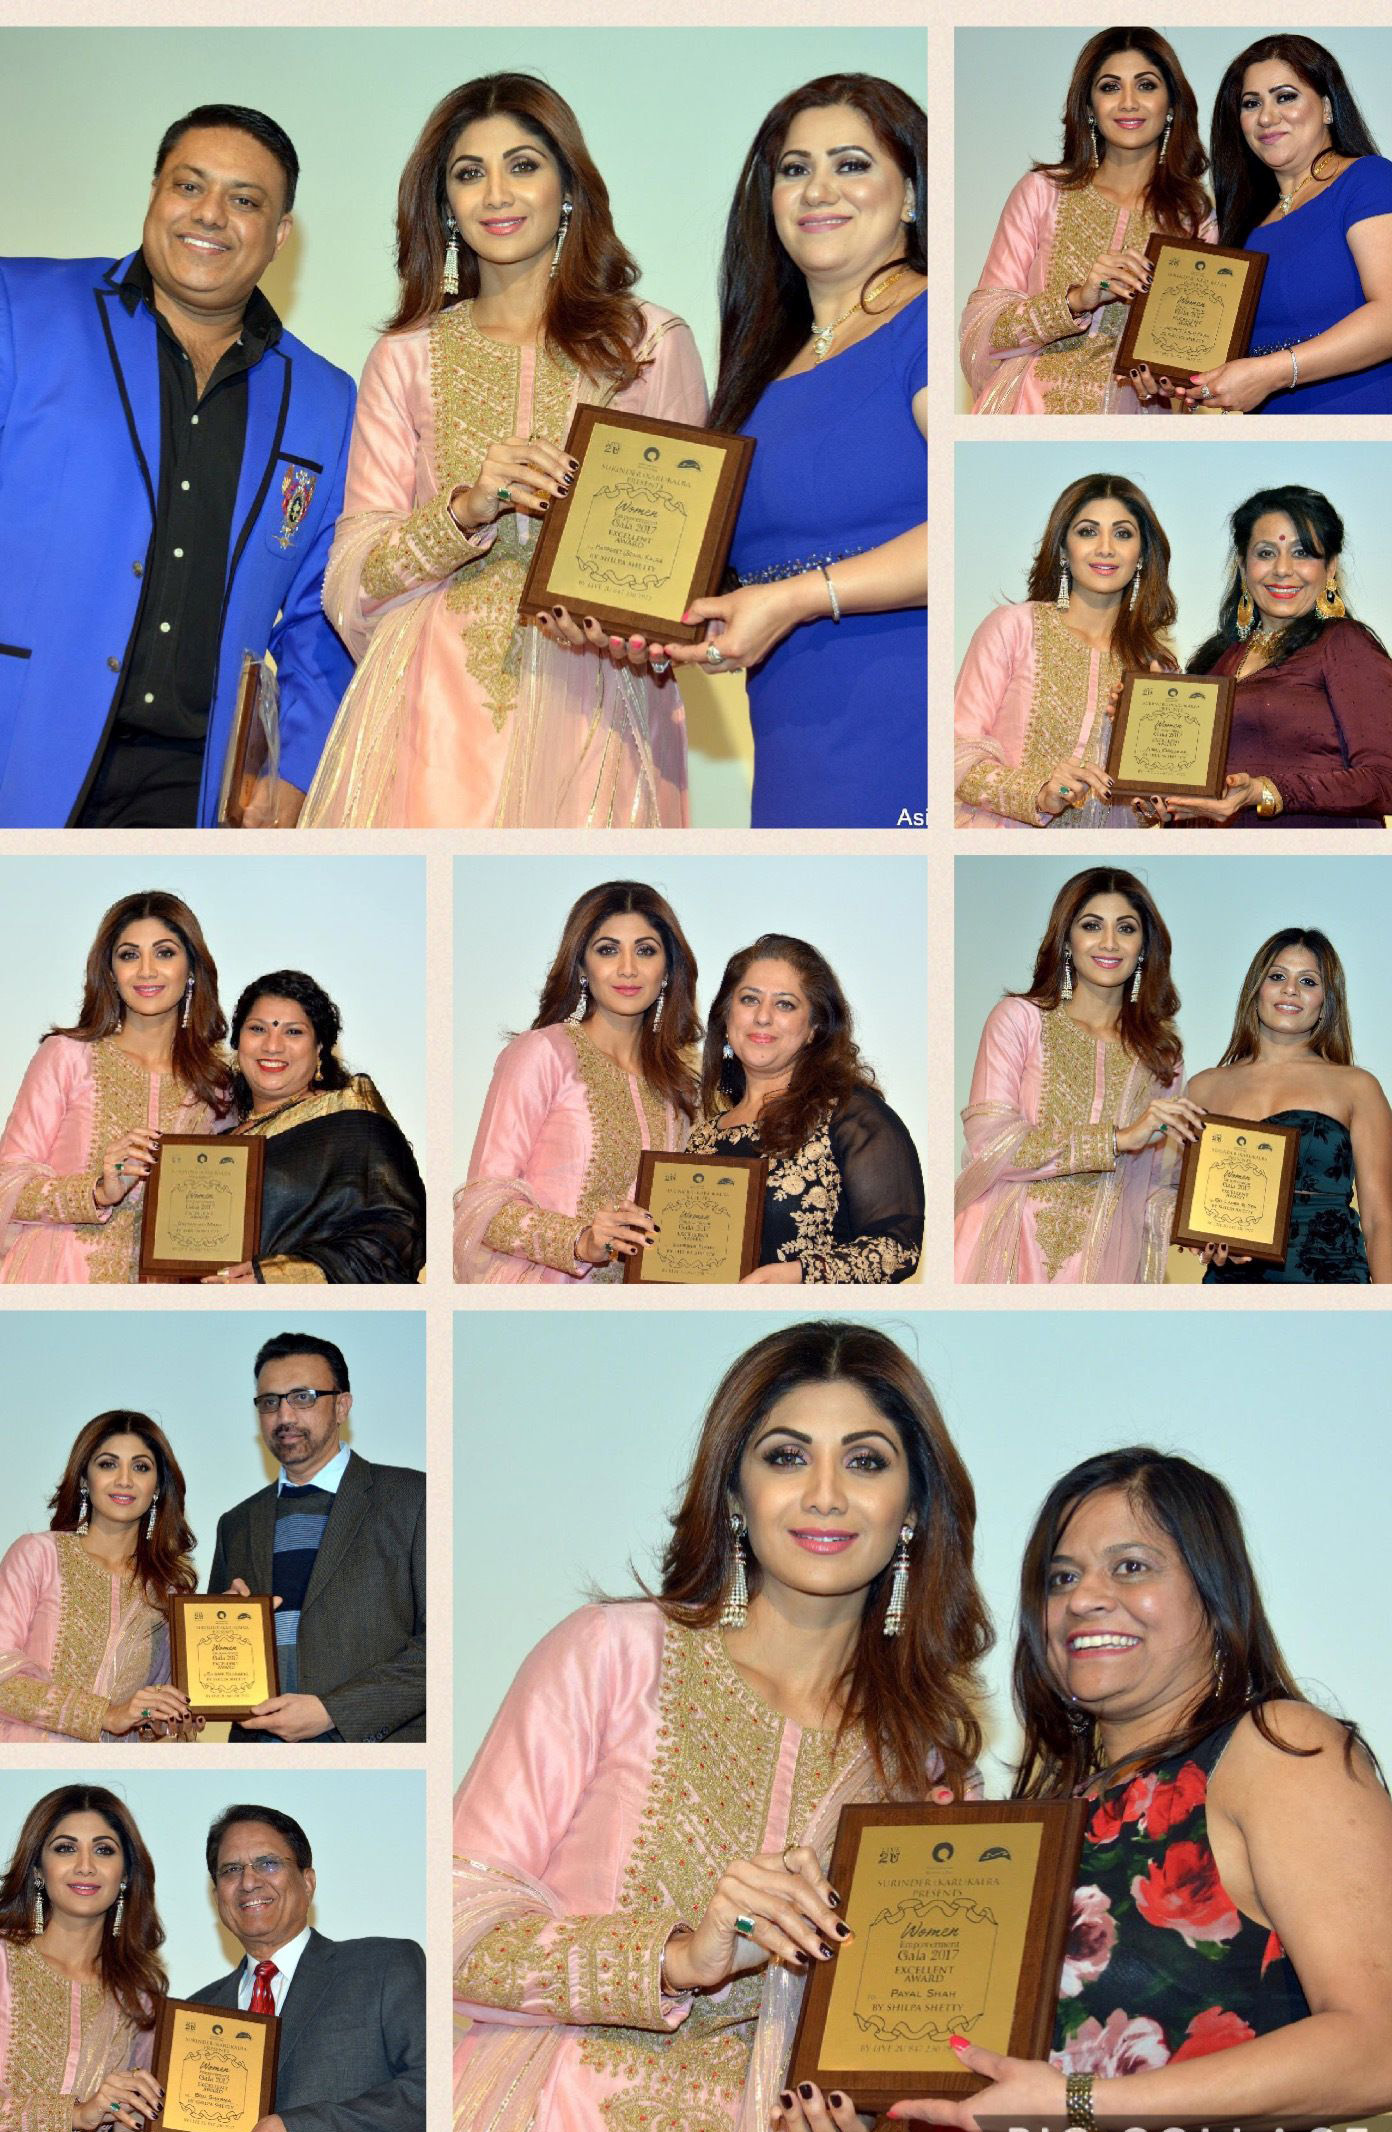 Sonia Kalra, Asha Oroskar, Geetanjali Maru, Madhoolica Dear, Sabrina Hans, Madan Kulkarni, Brij Sharma and Payal Shah were honored by Shilpa Shetty-Kundra with plaques